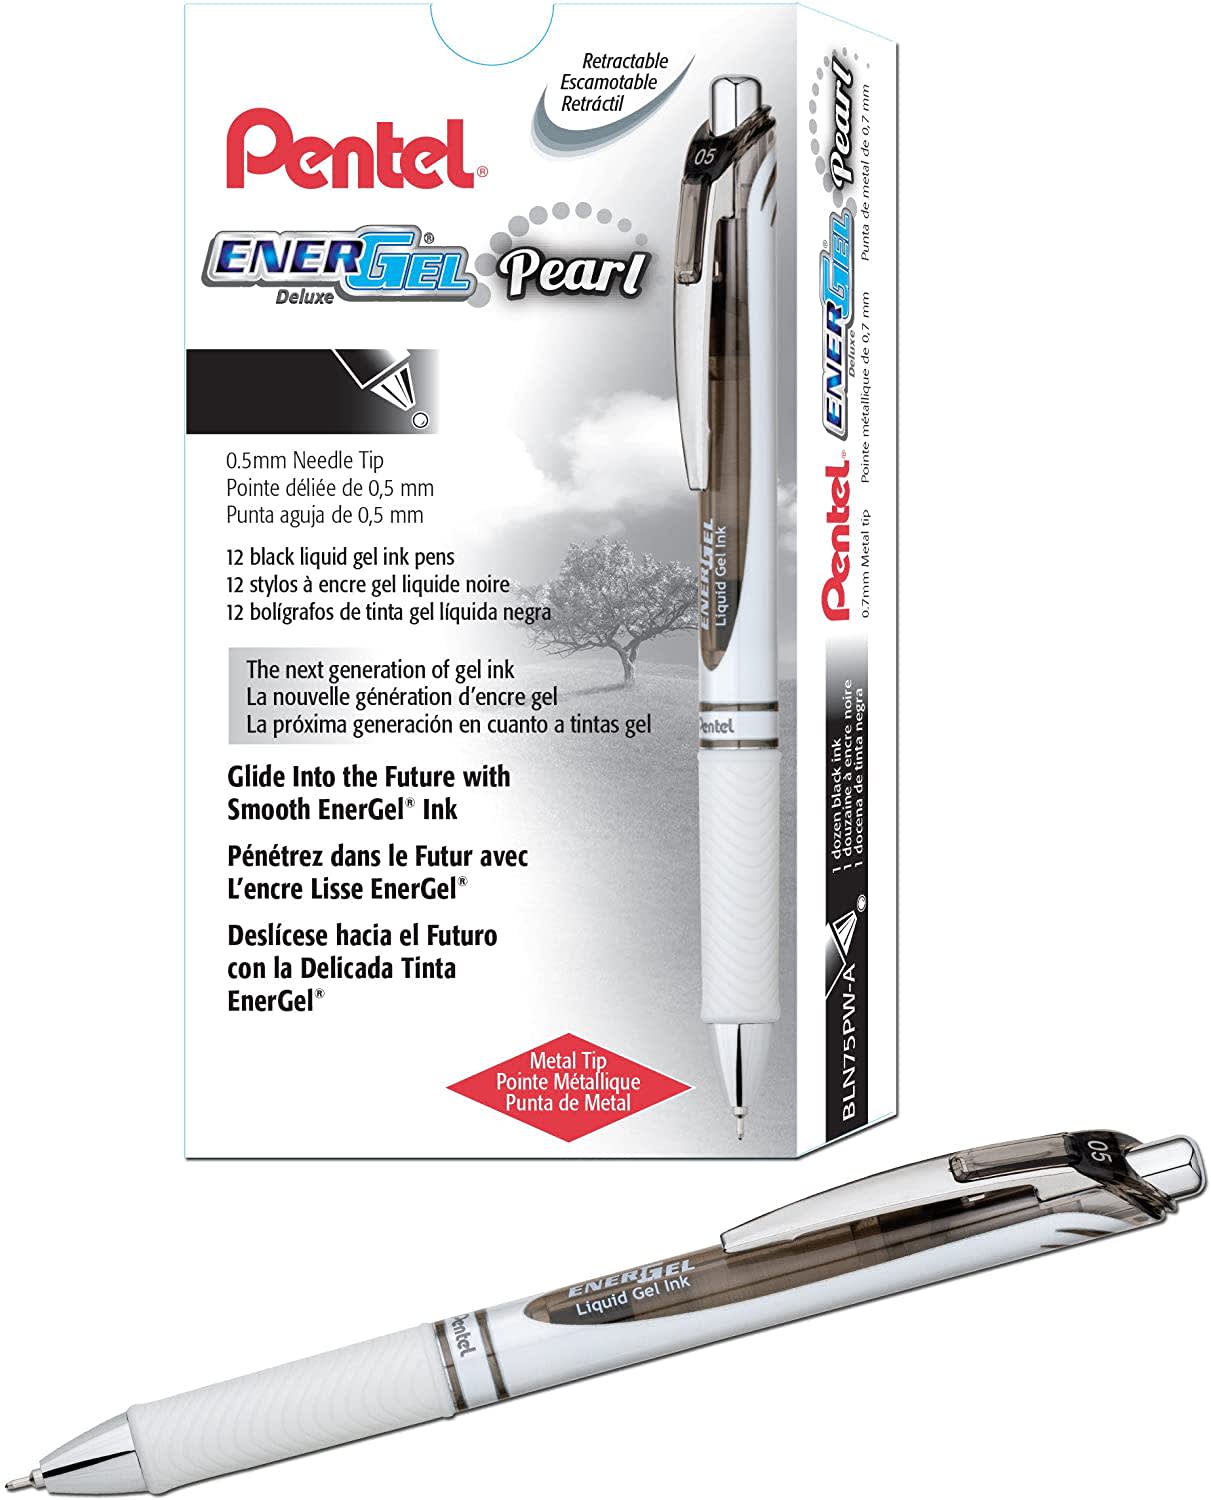 Pentel EnerGel Pearl Deluxe RTX Liquid Gel Pen 12-Pack